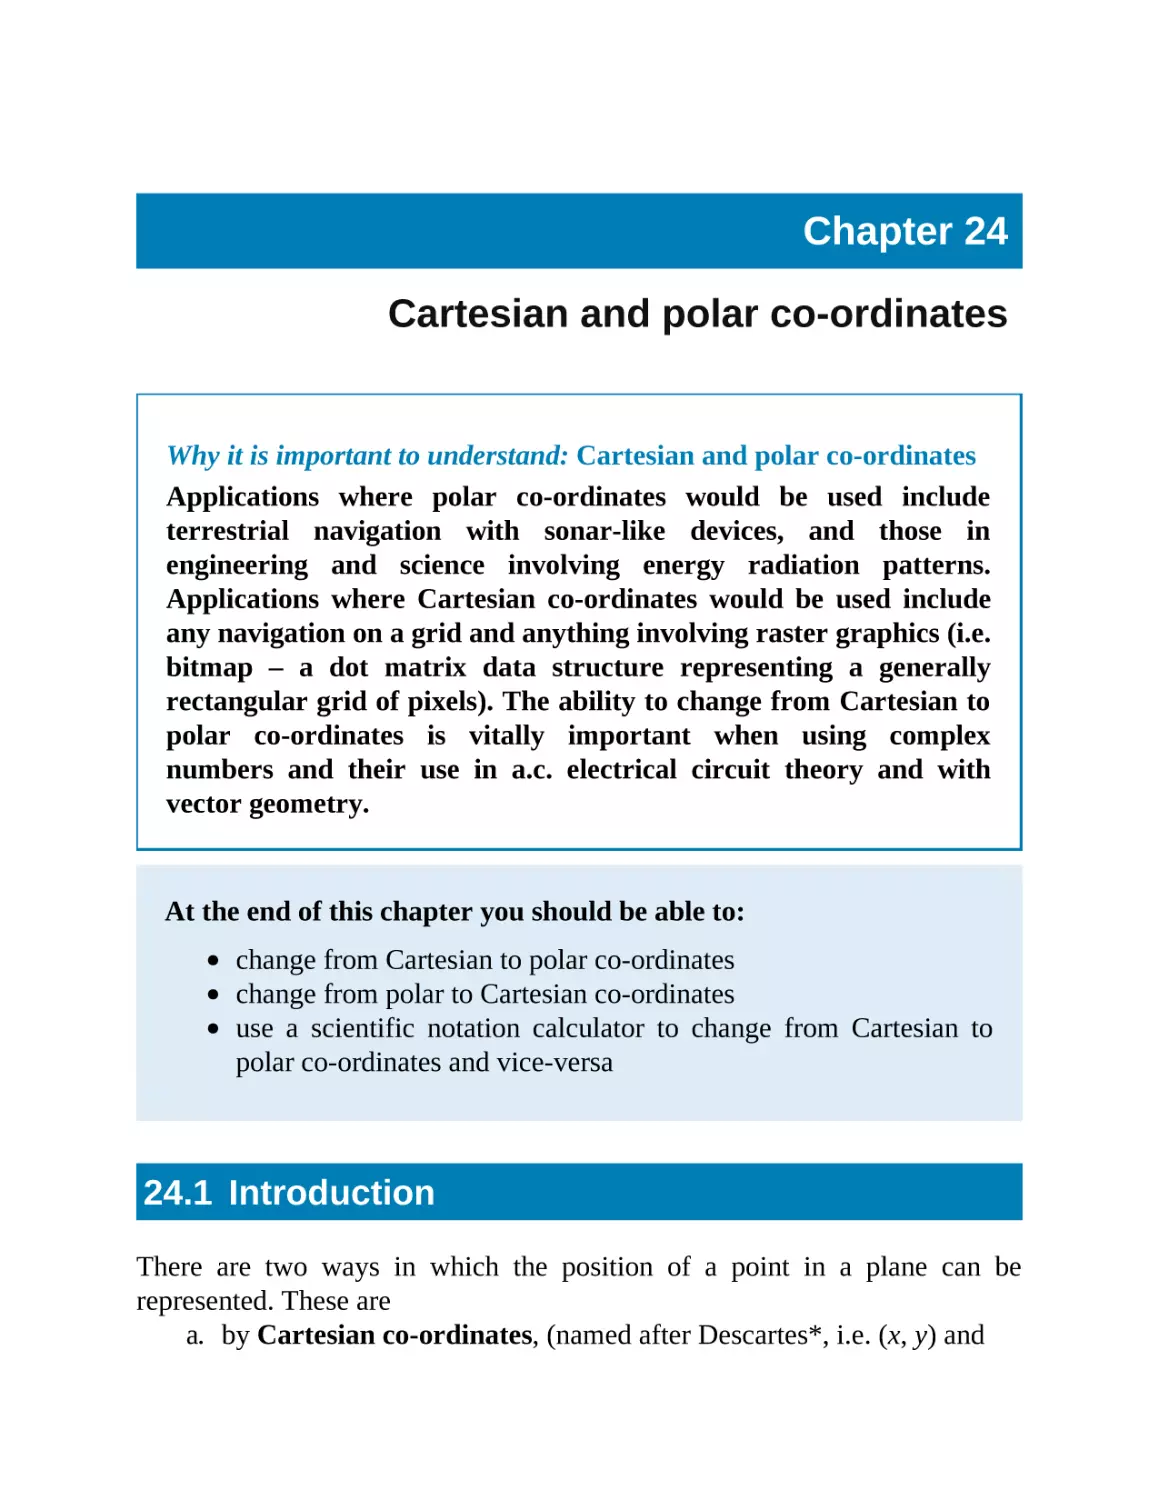 24 Cartesian and polar co-ordinates
24.1 Introduction